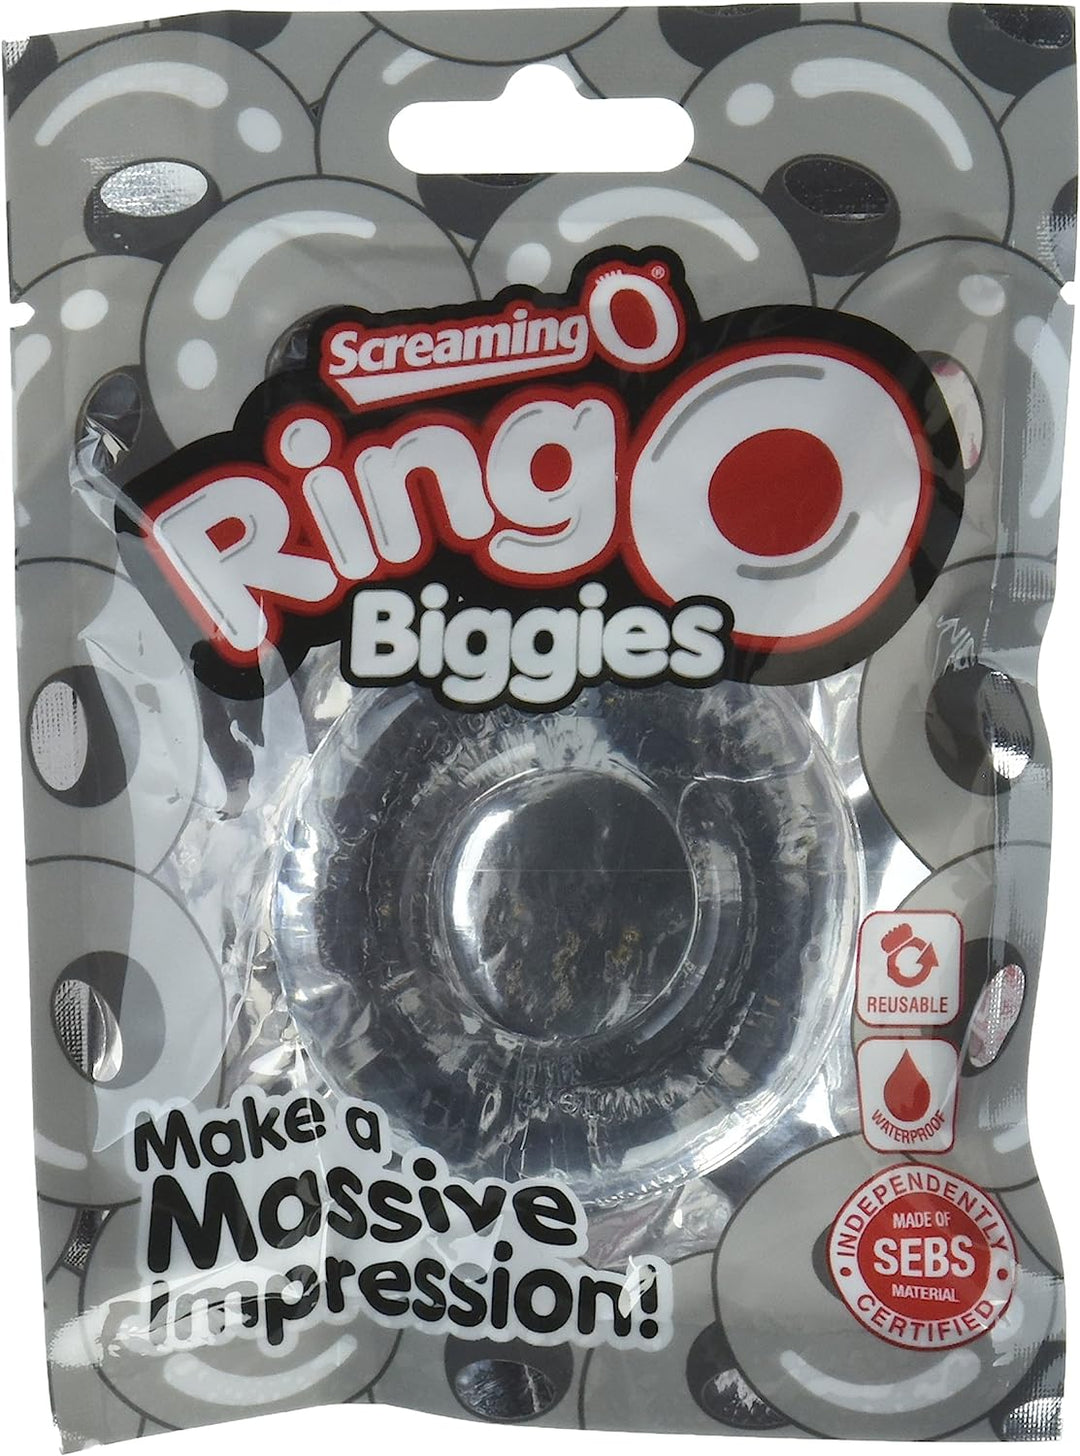 RingO Biggies - Boutique Toi Et Moi